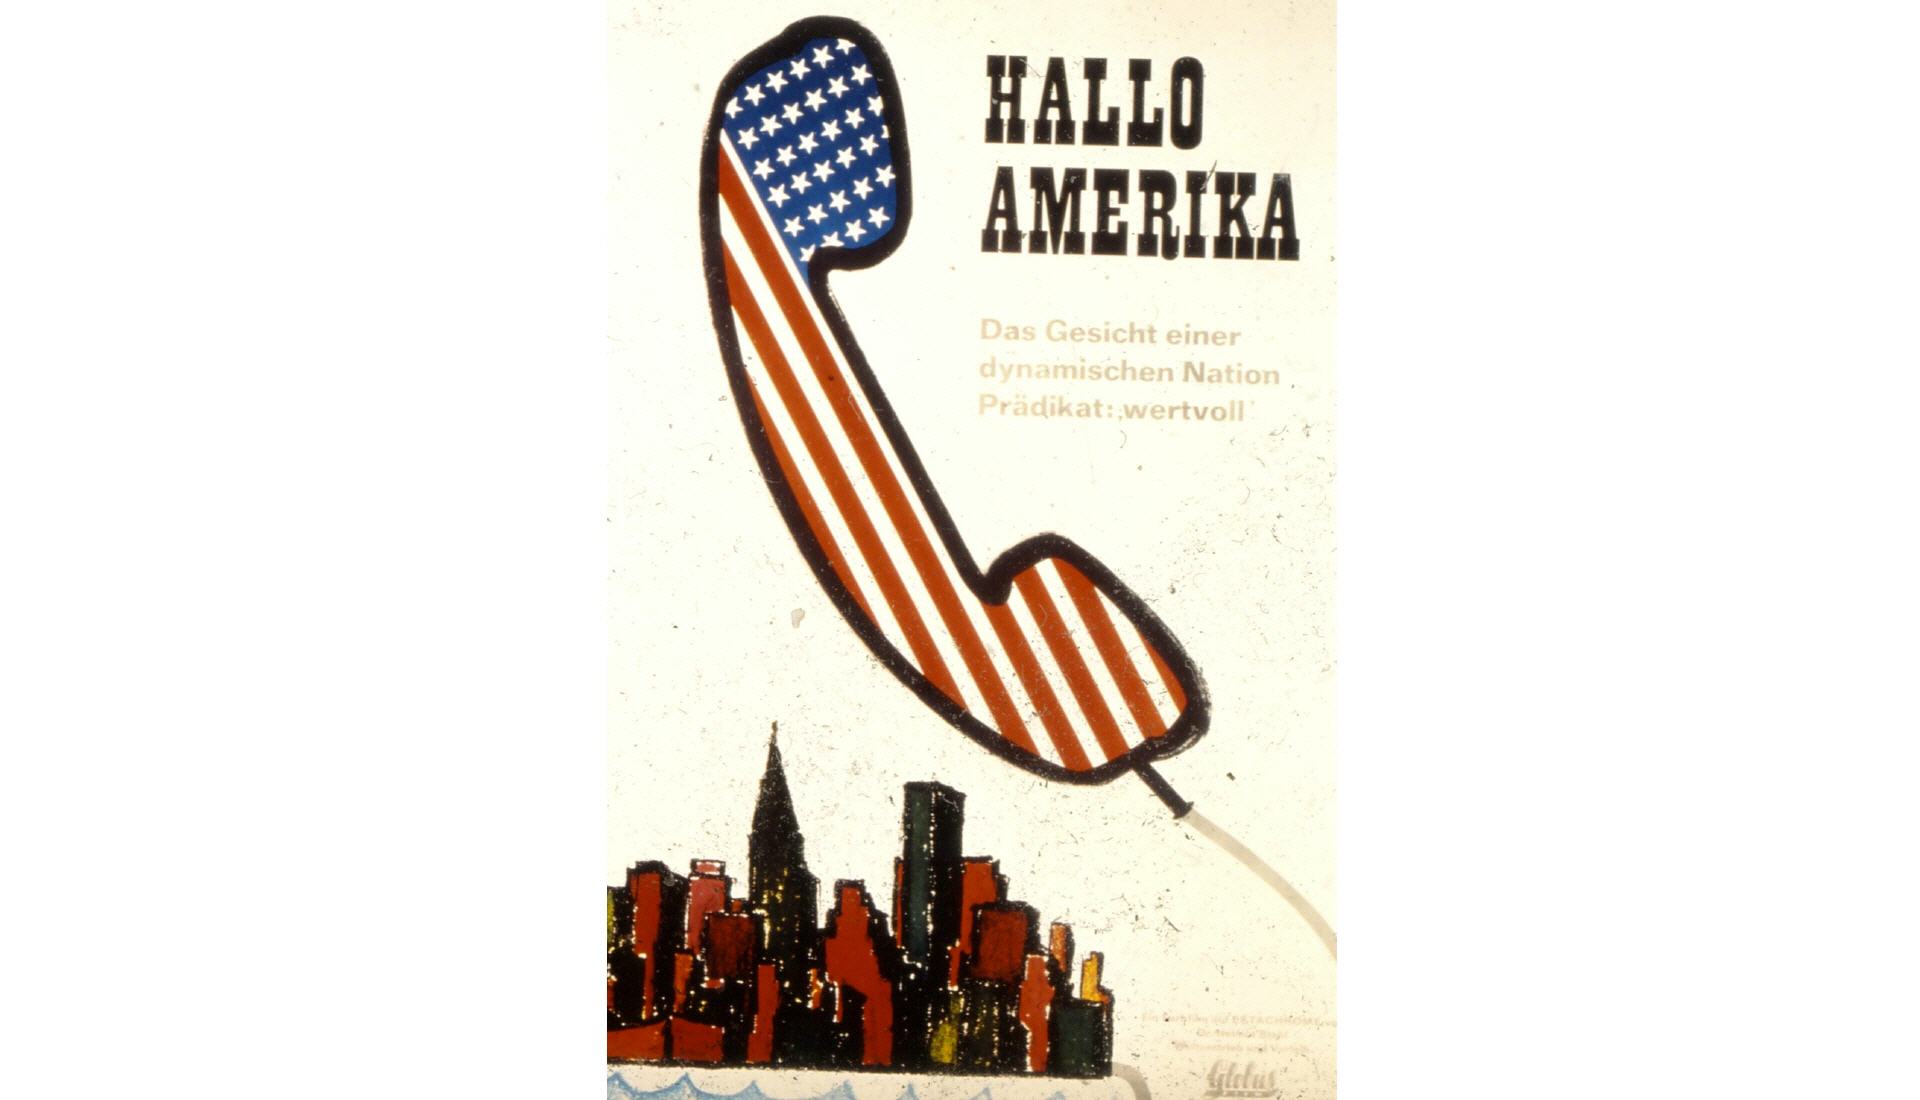 HALLO AMERIKA (1963)